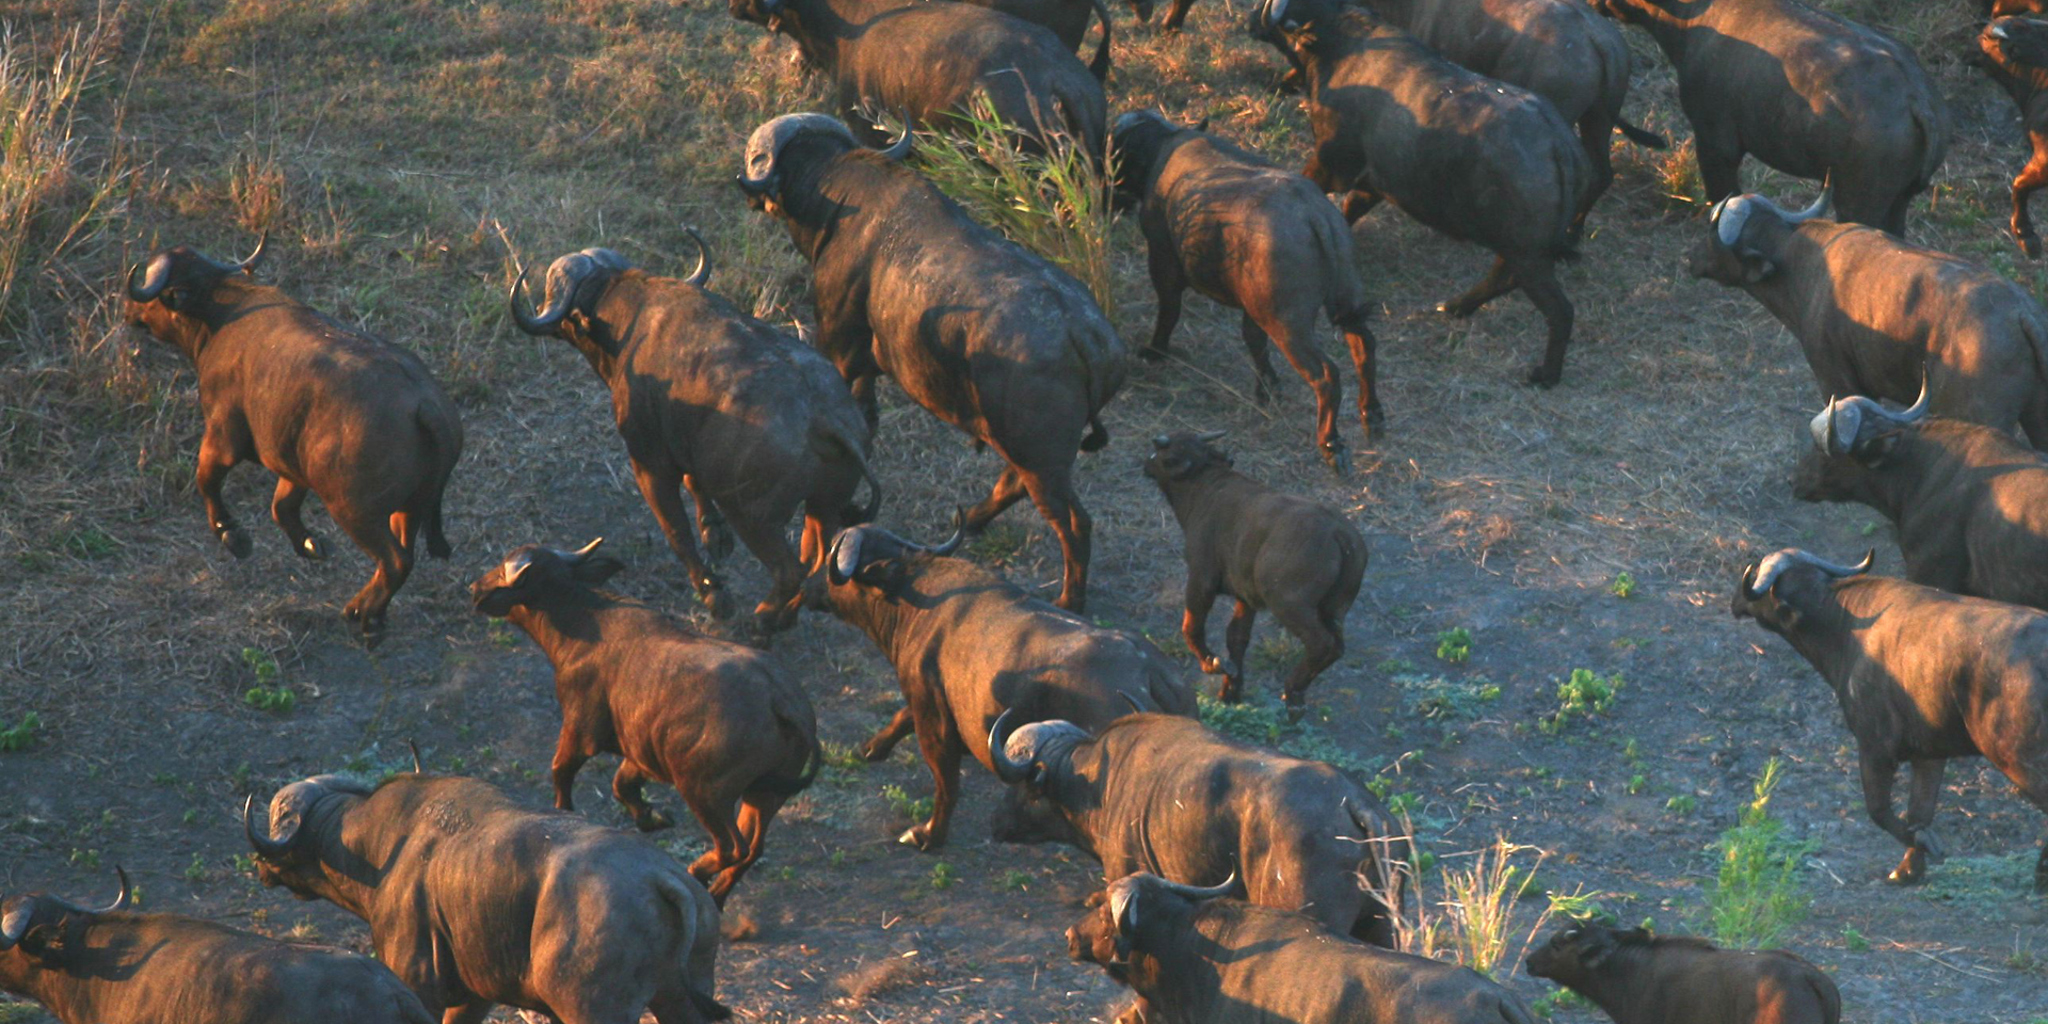 buffalo, wildlife in gorongosa, mozambique safari holidays